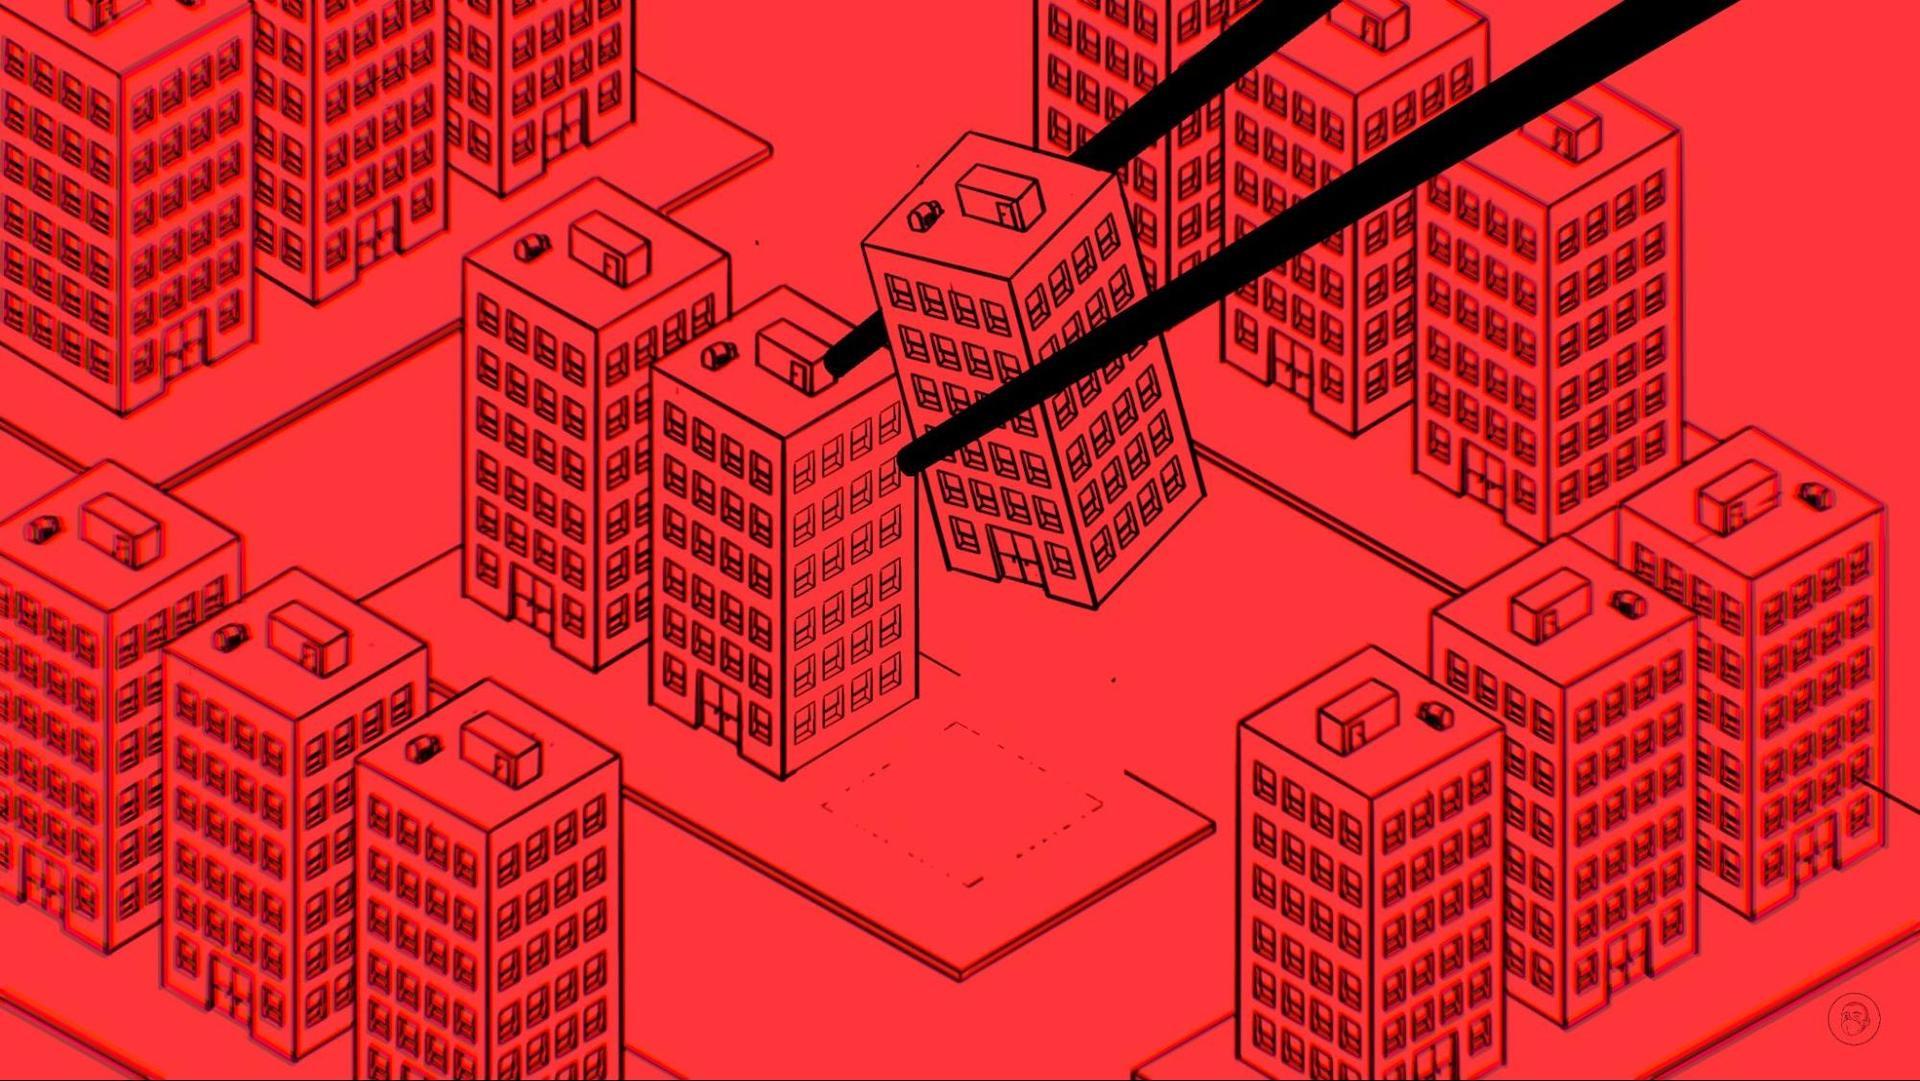 An illustration by Alex Santafe depicting some chopsticks picking a building